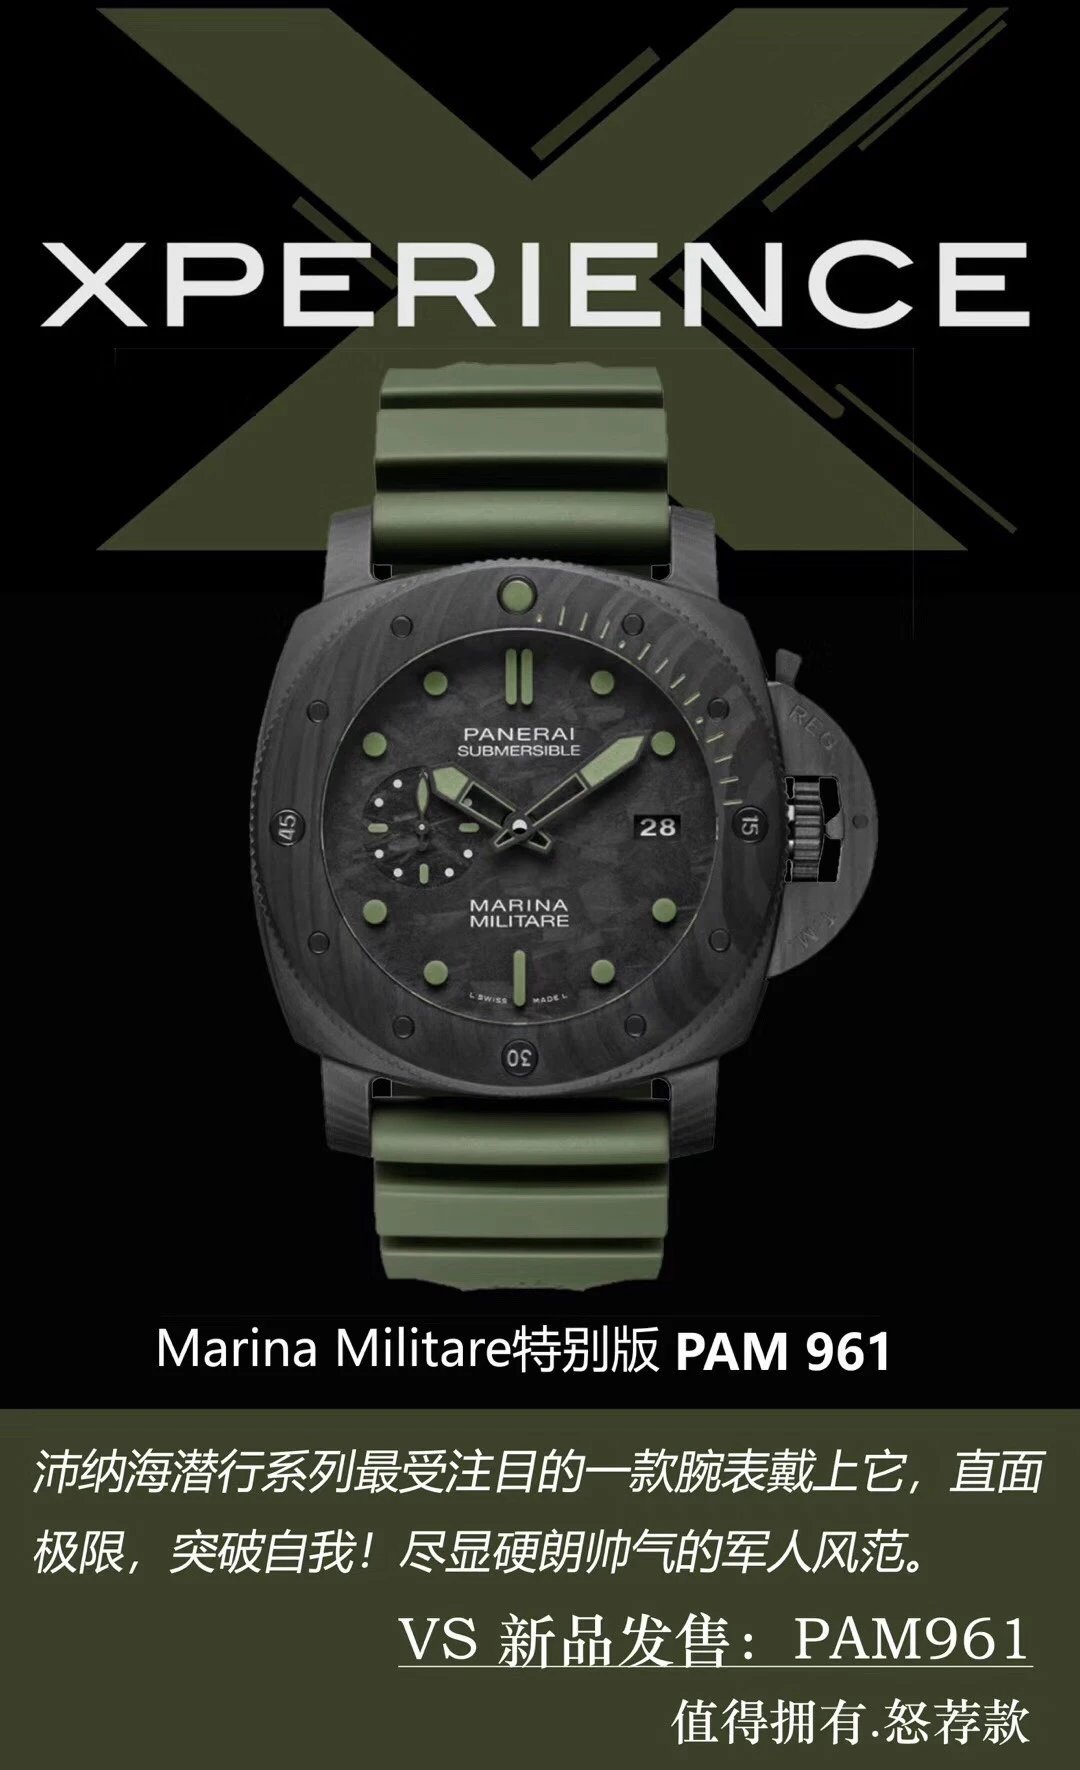 VS沛纳海PAM961腕表是魅力加分的一款  沛纳海潜行者高仿手表